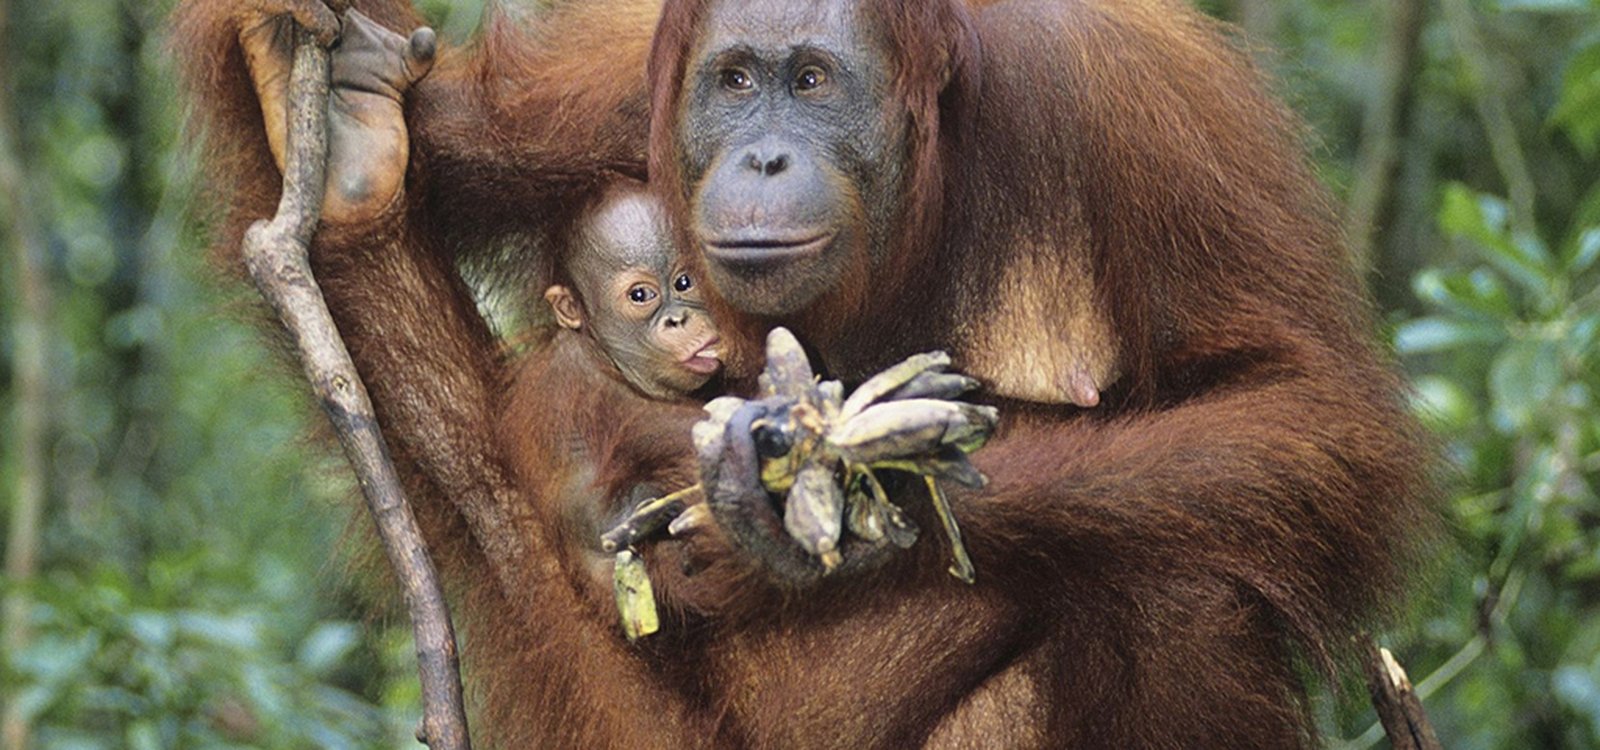 <p>Orangutans are another close relative of humans.</p>
